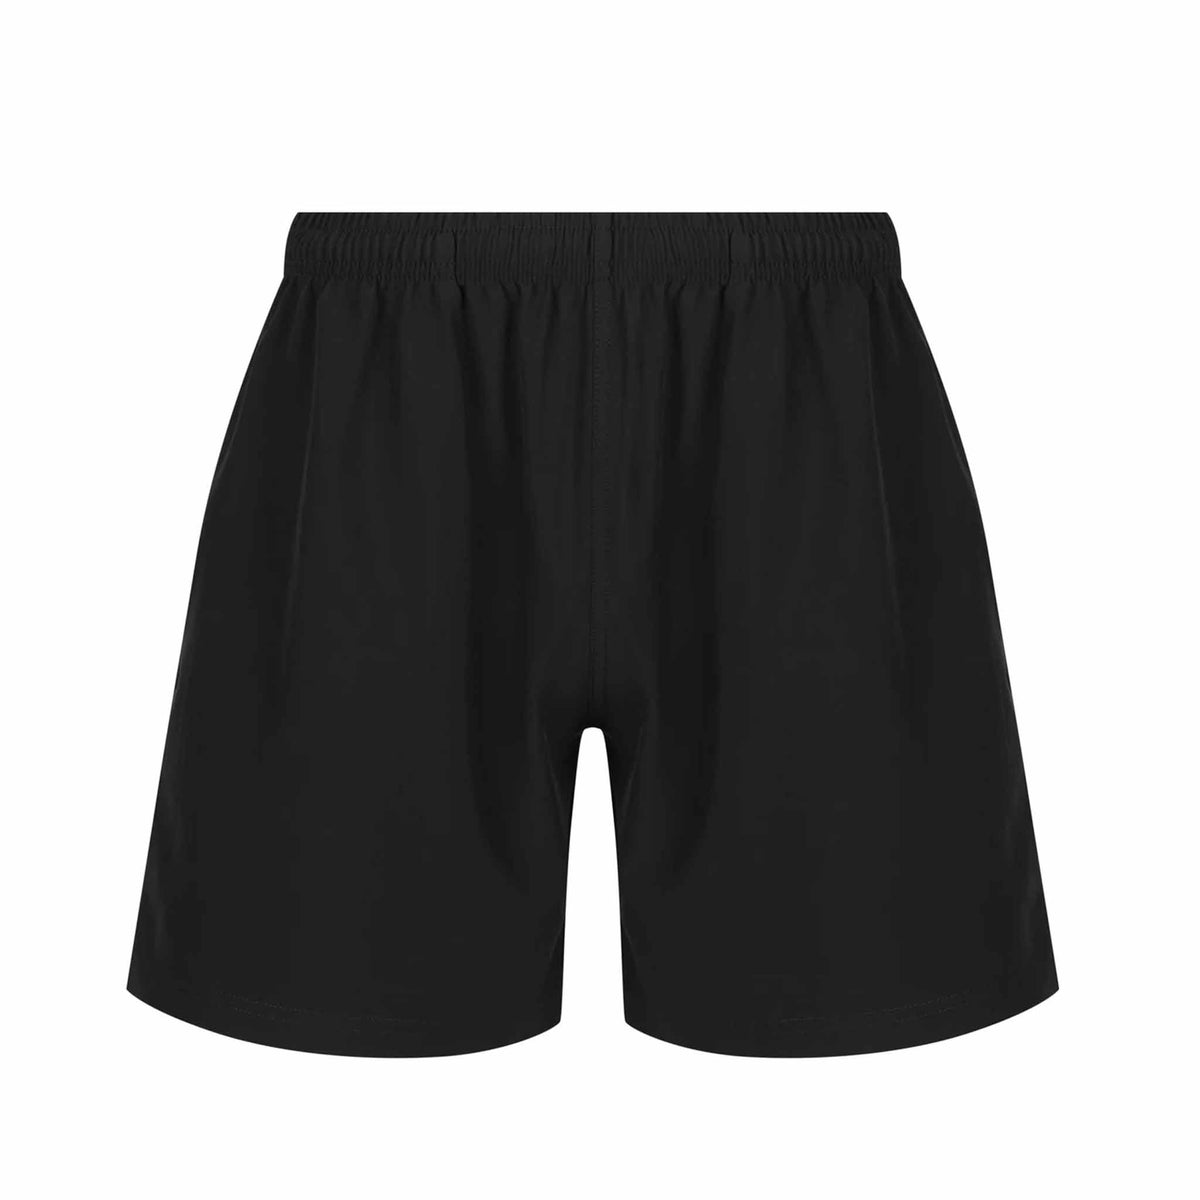 aussie pacific training shorts in black